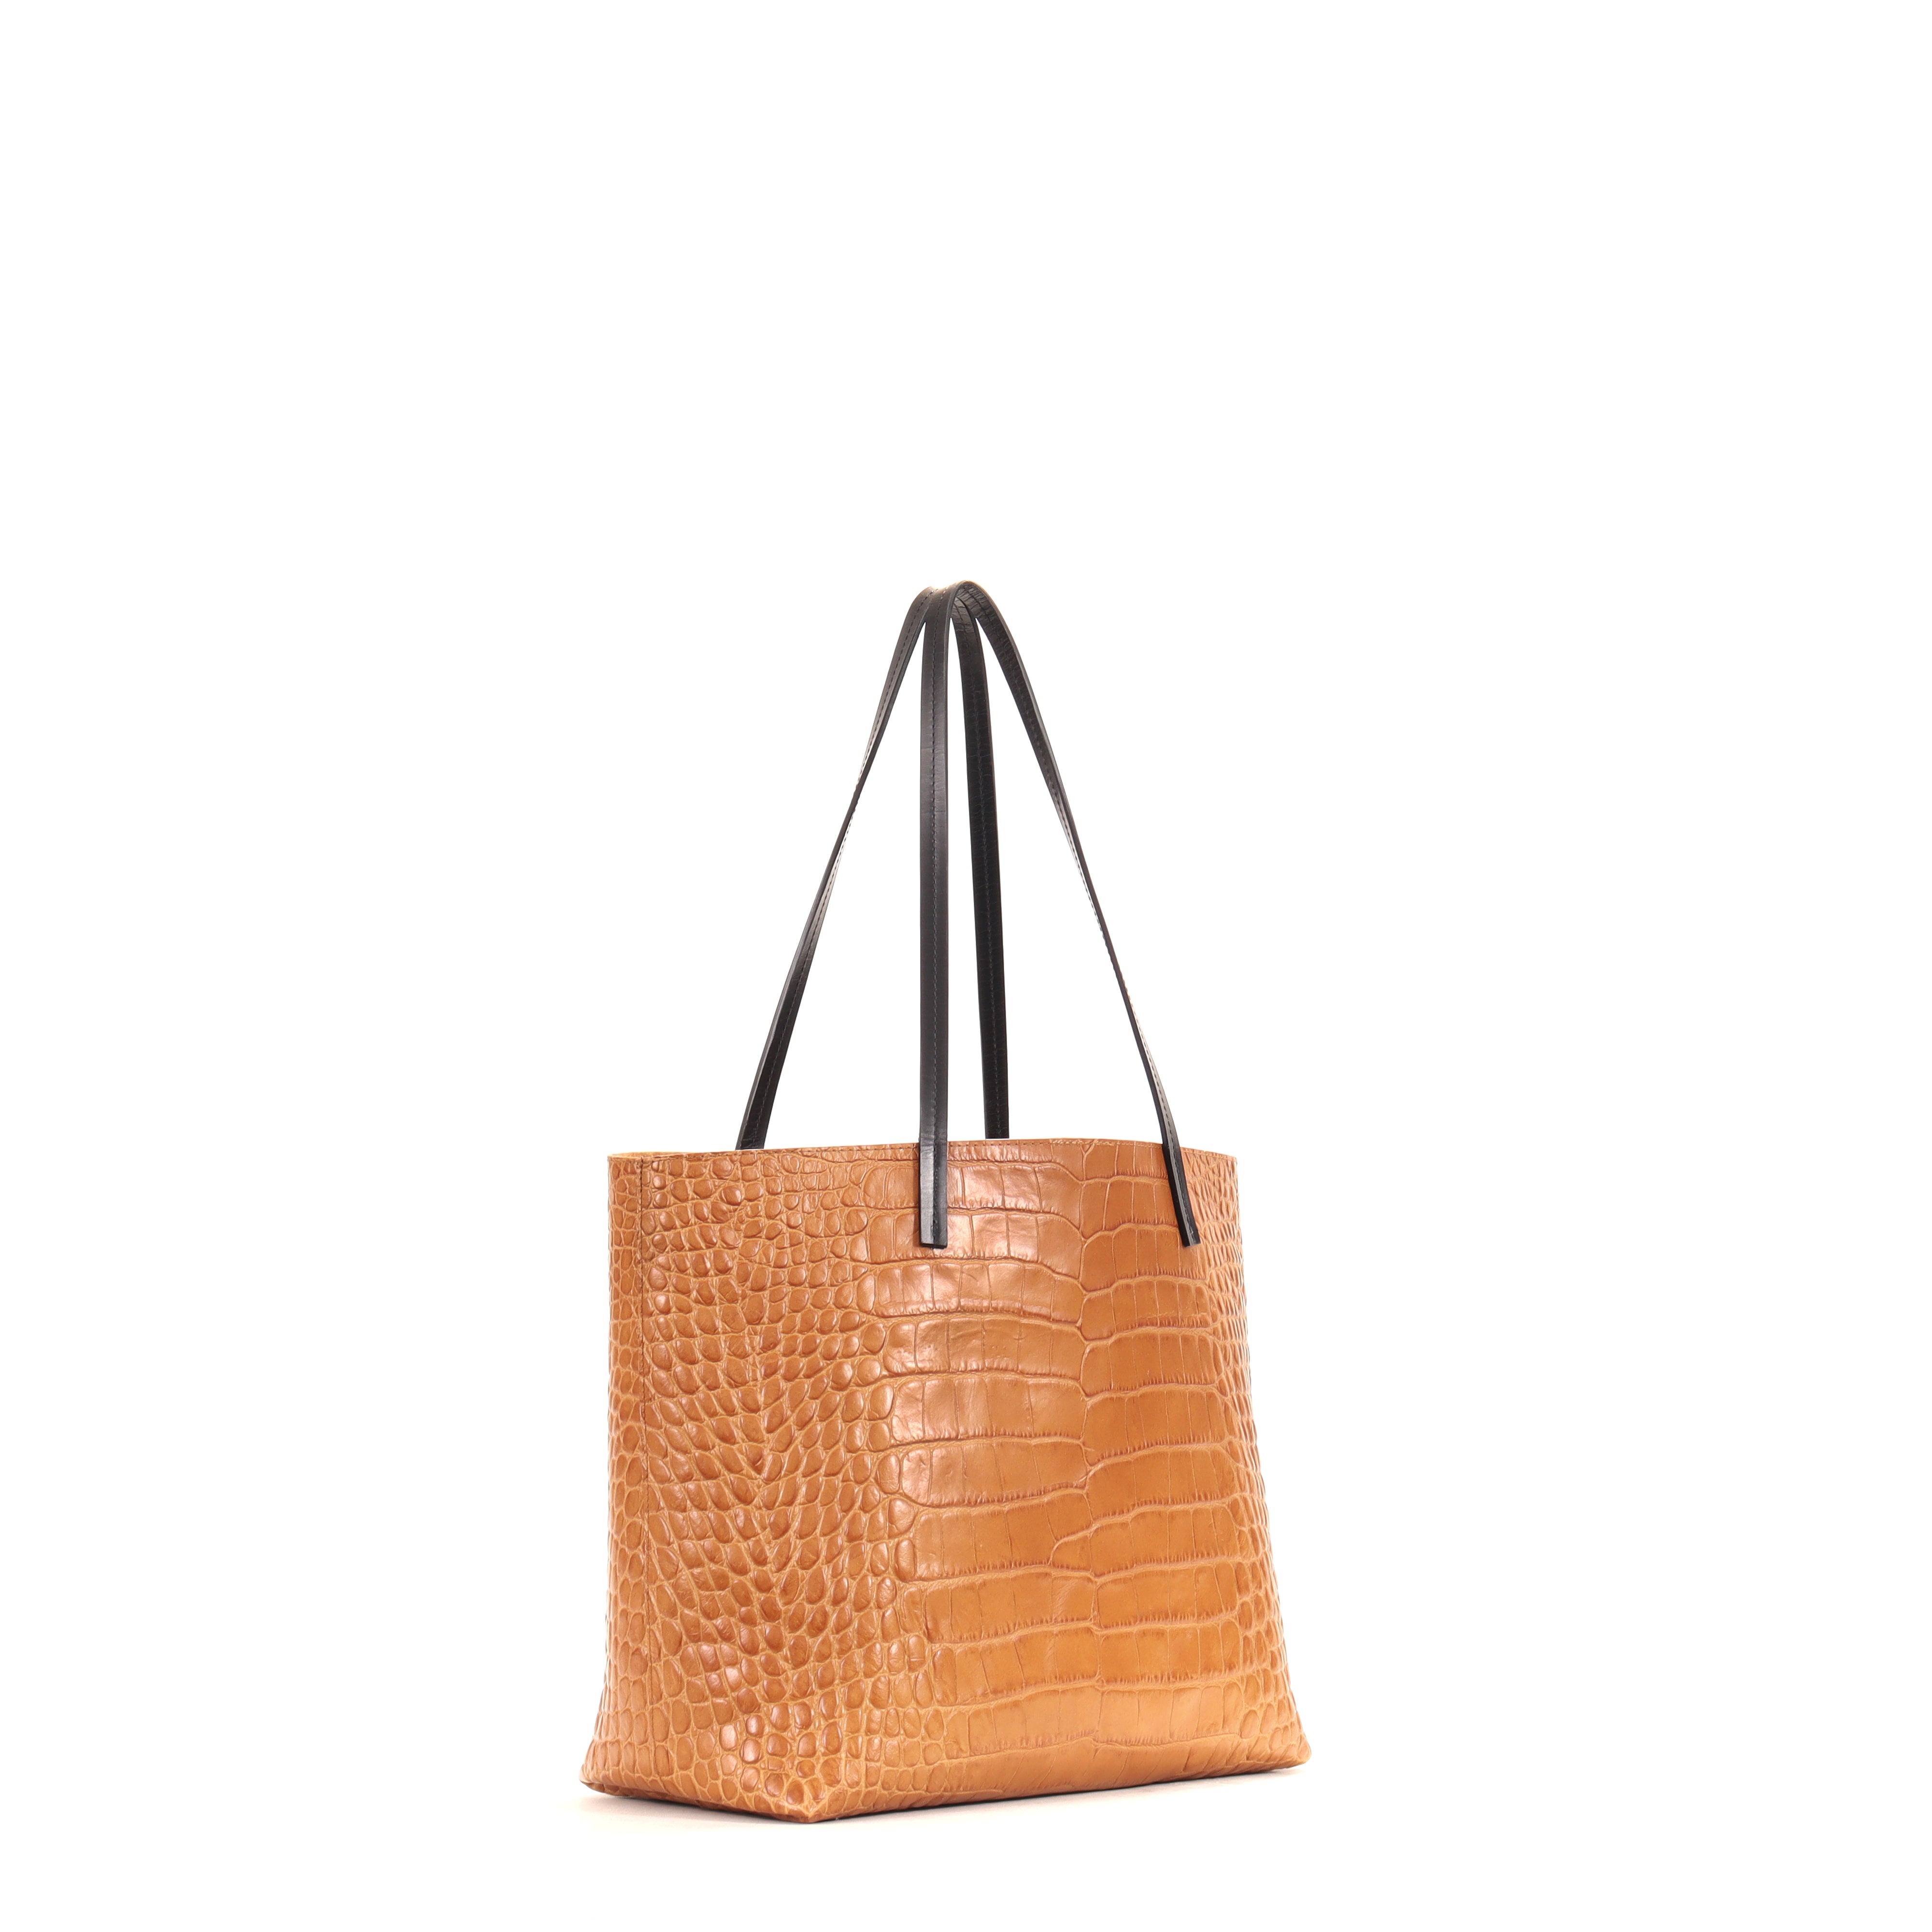 Ggg Handbags Hand Bag, Hhhh, Size: Hhhhhhh at Rs 500/piece in Dehradun |  ID: 24203026633